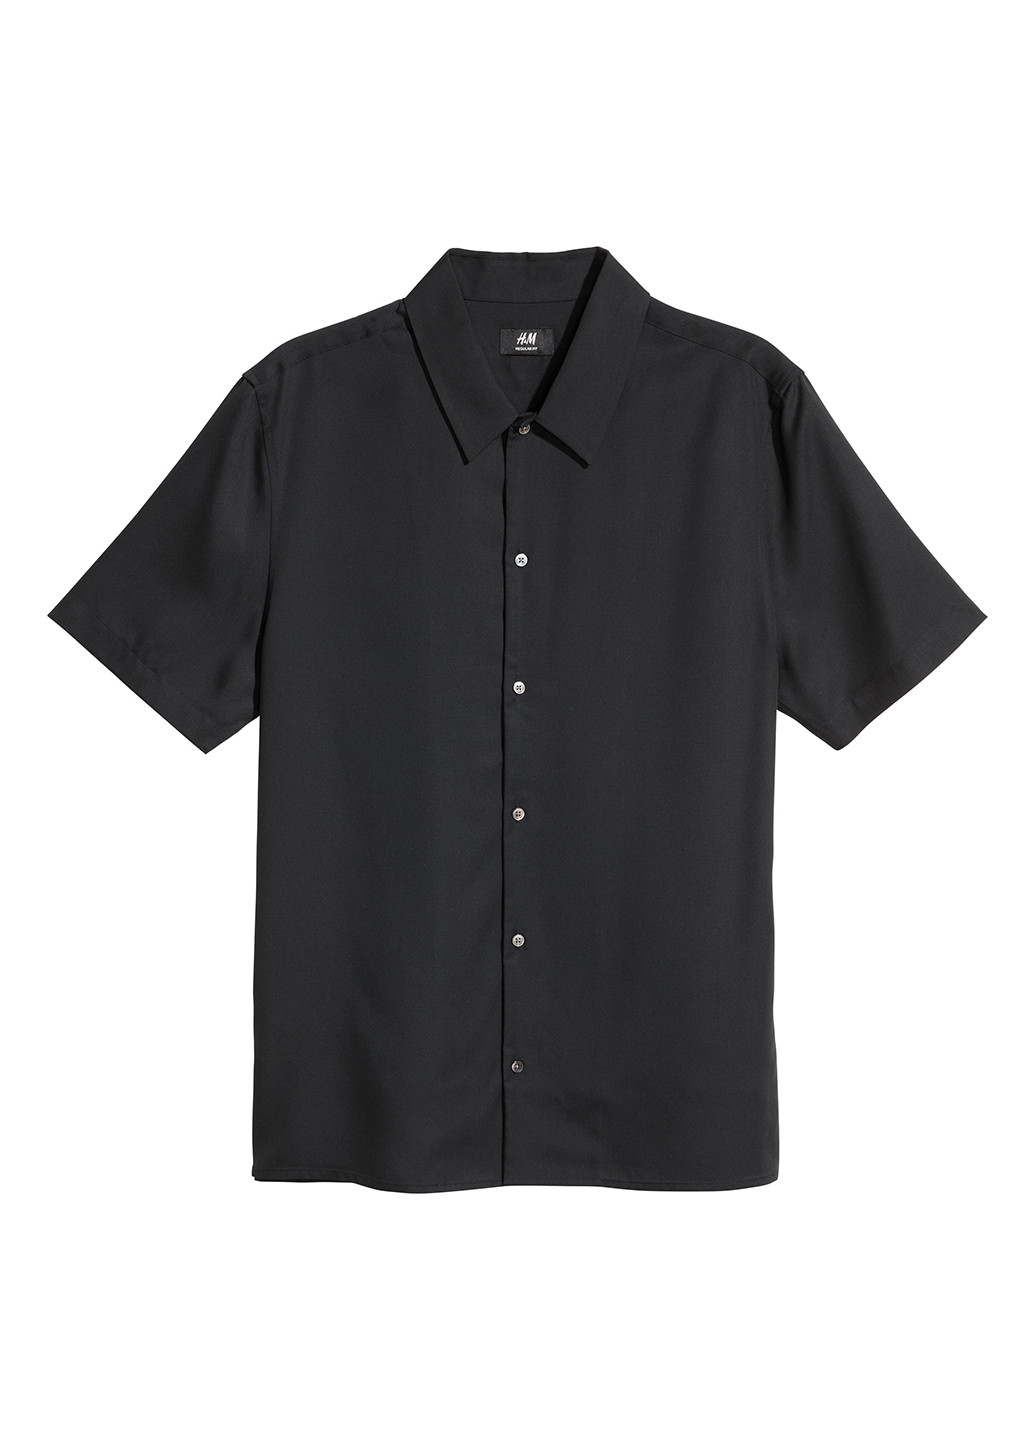 Черная кэжуал рубашка H&M с коротким рукавом